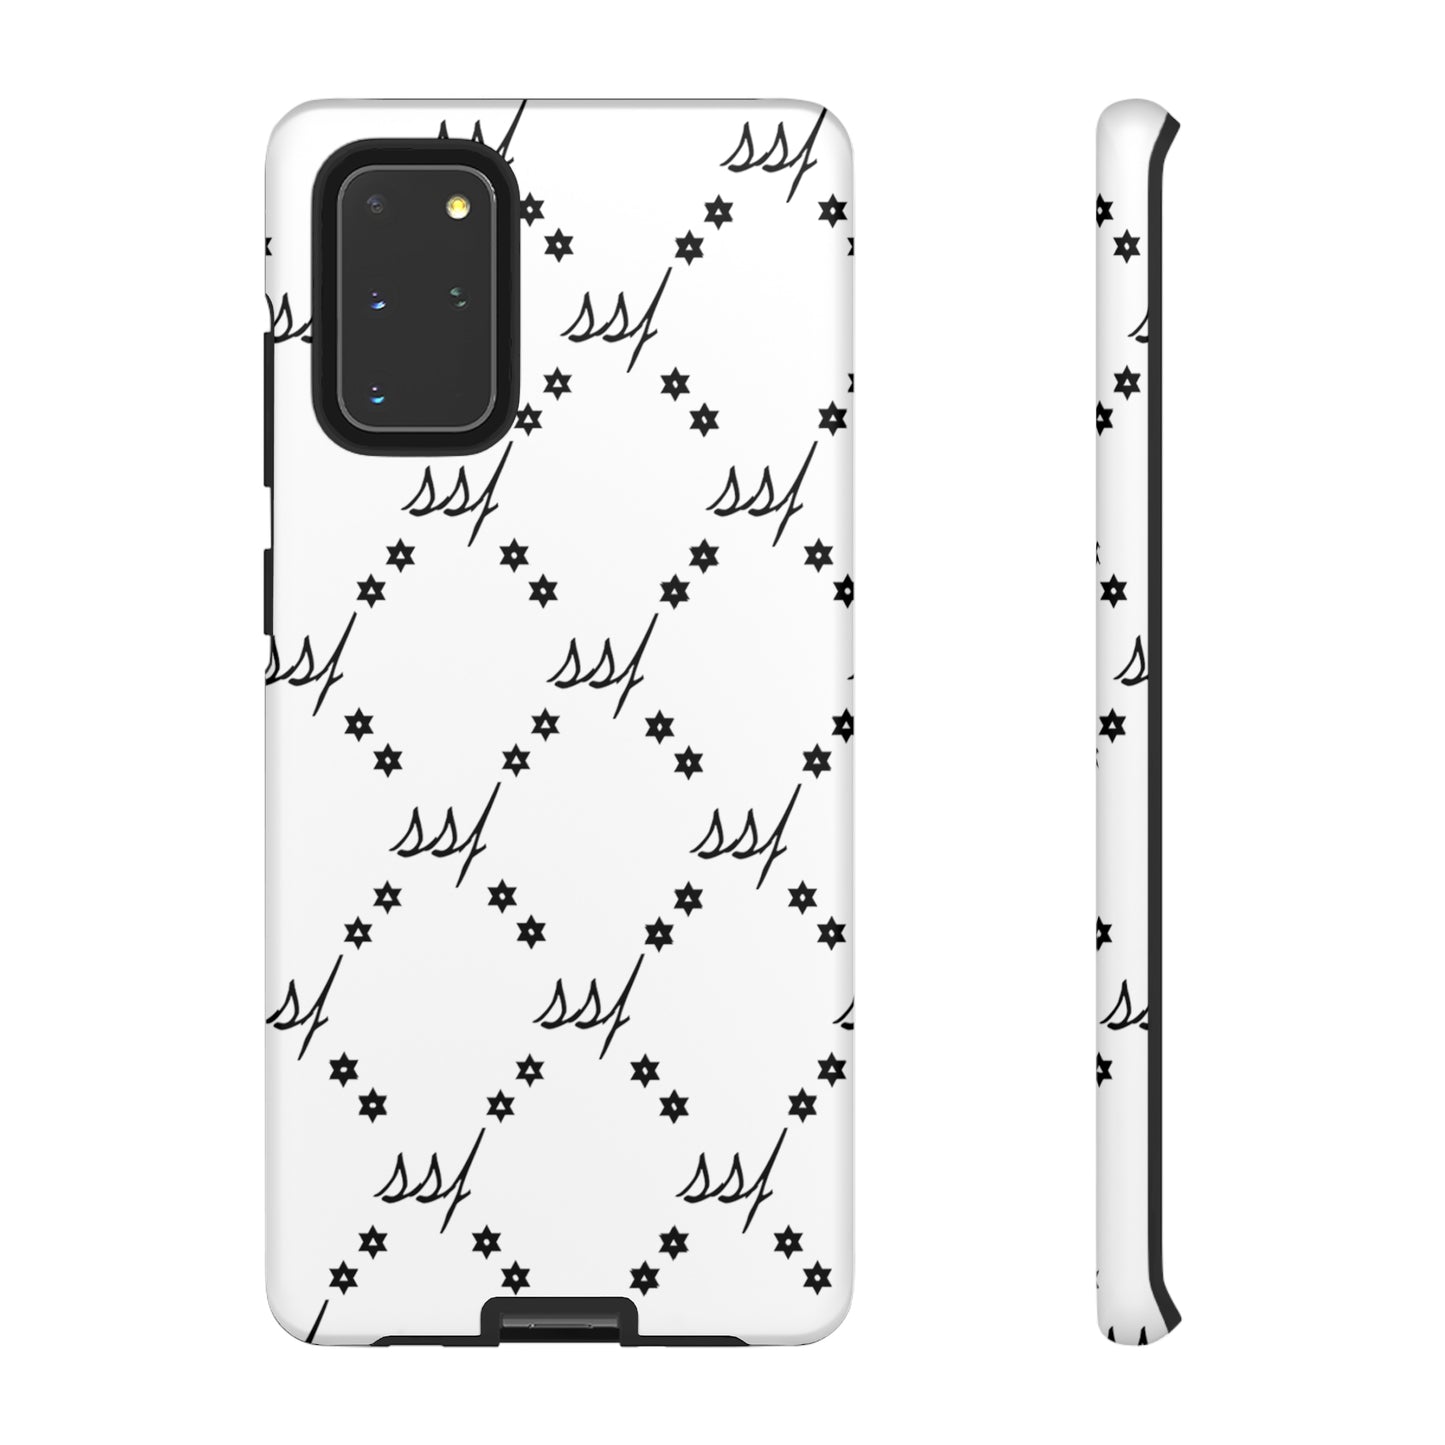 Samsung/Google Phone Case in White